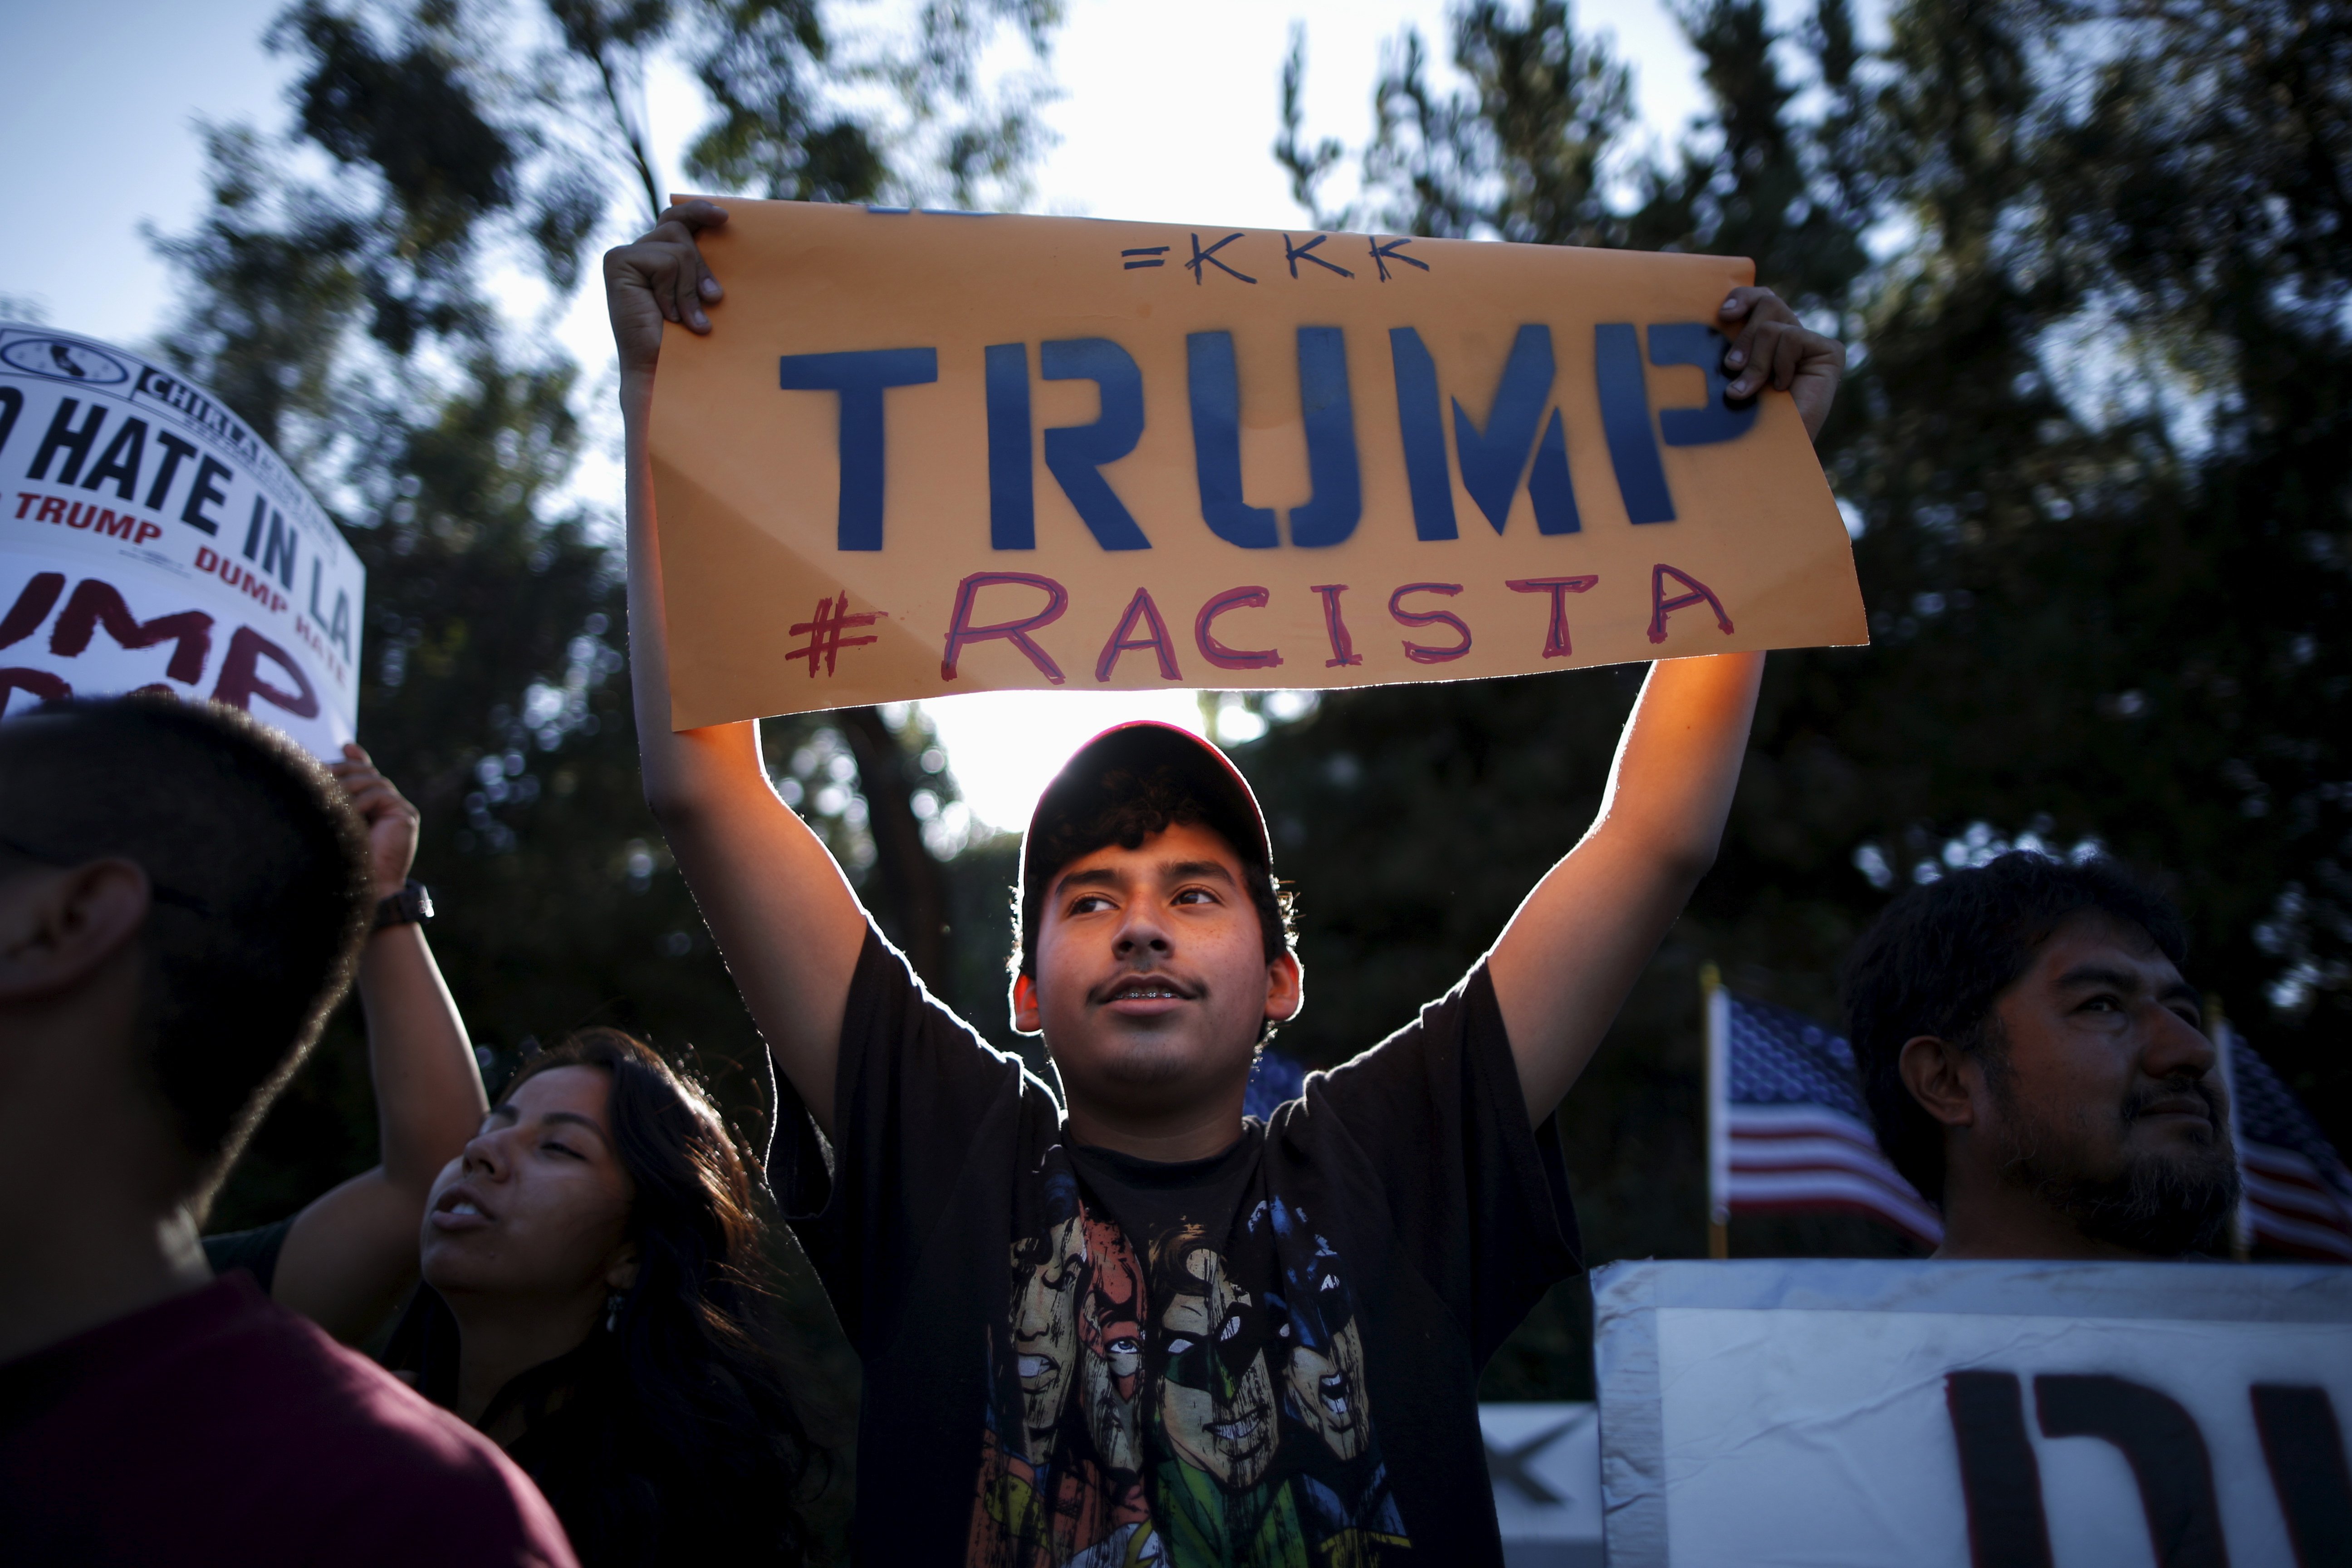  Hasta 79% de hispanos percibe a Trump como extremista